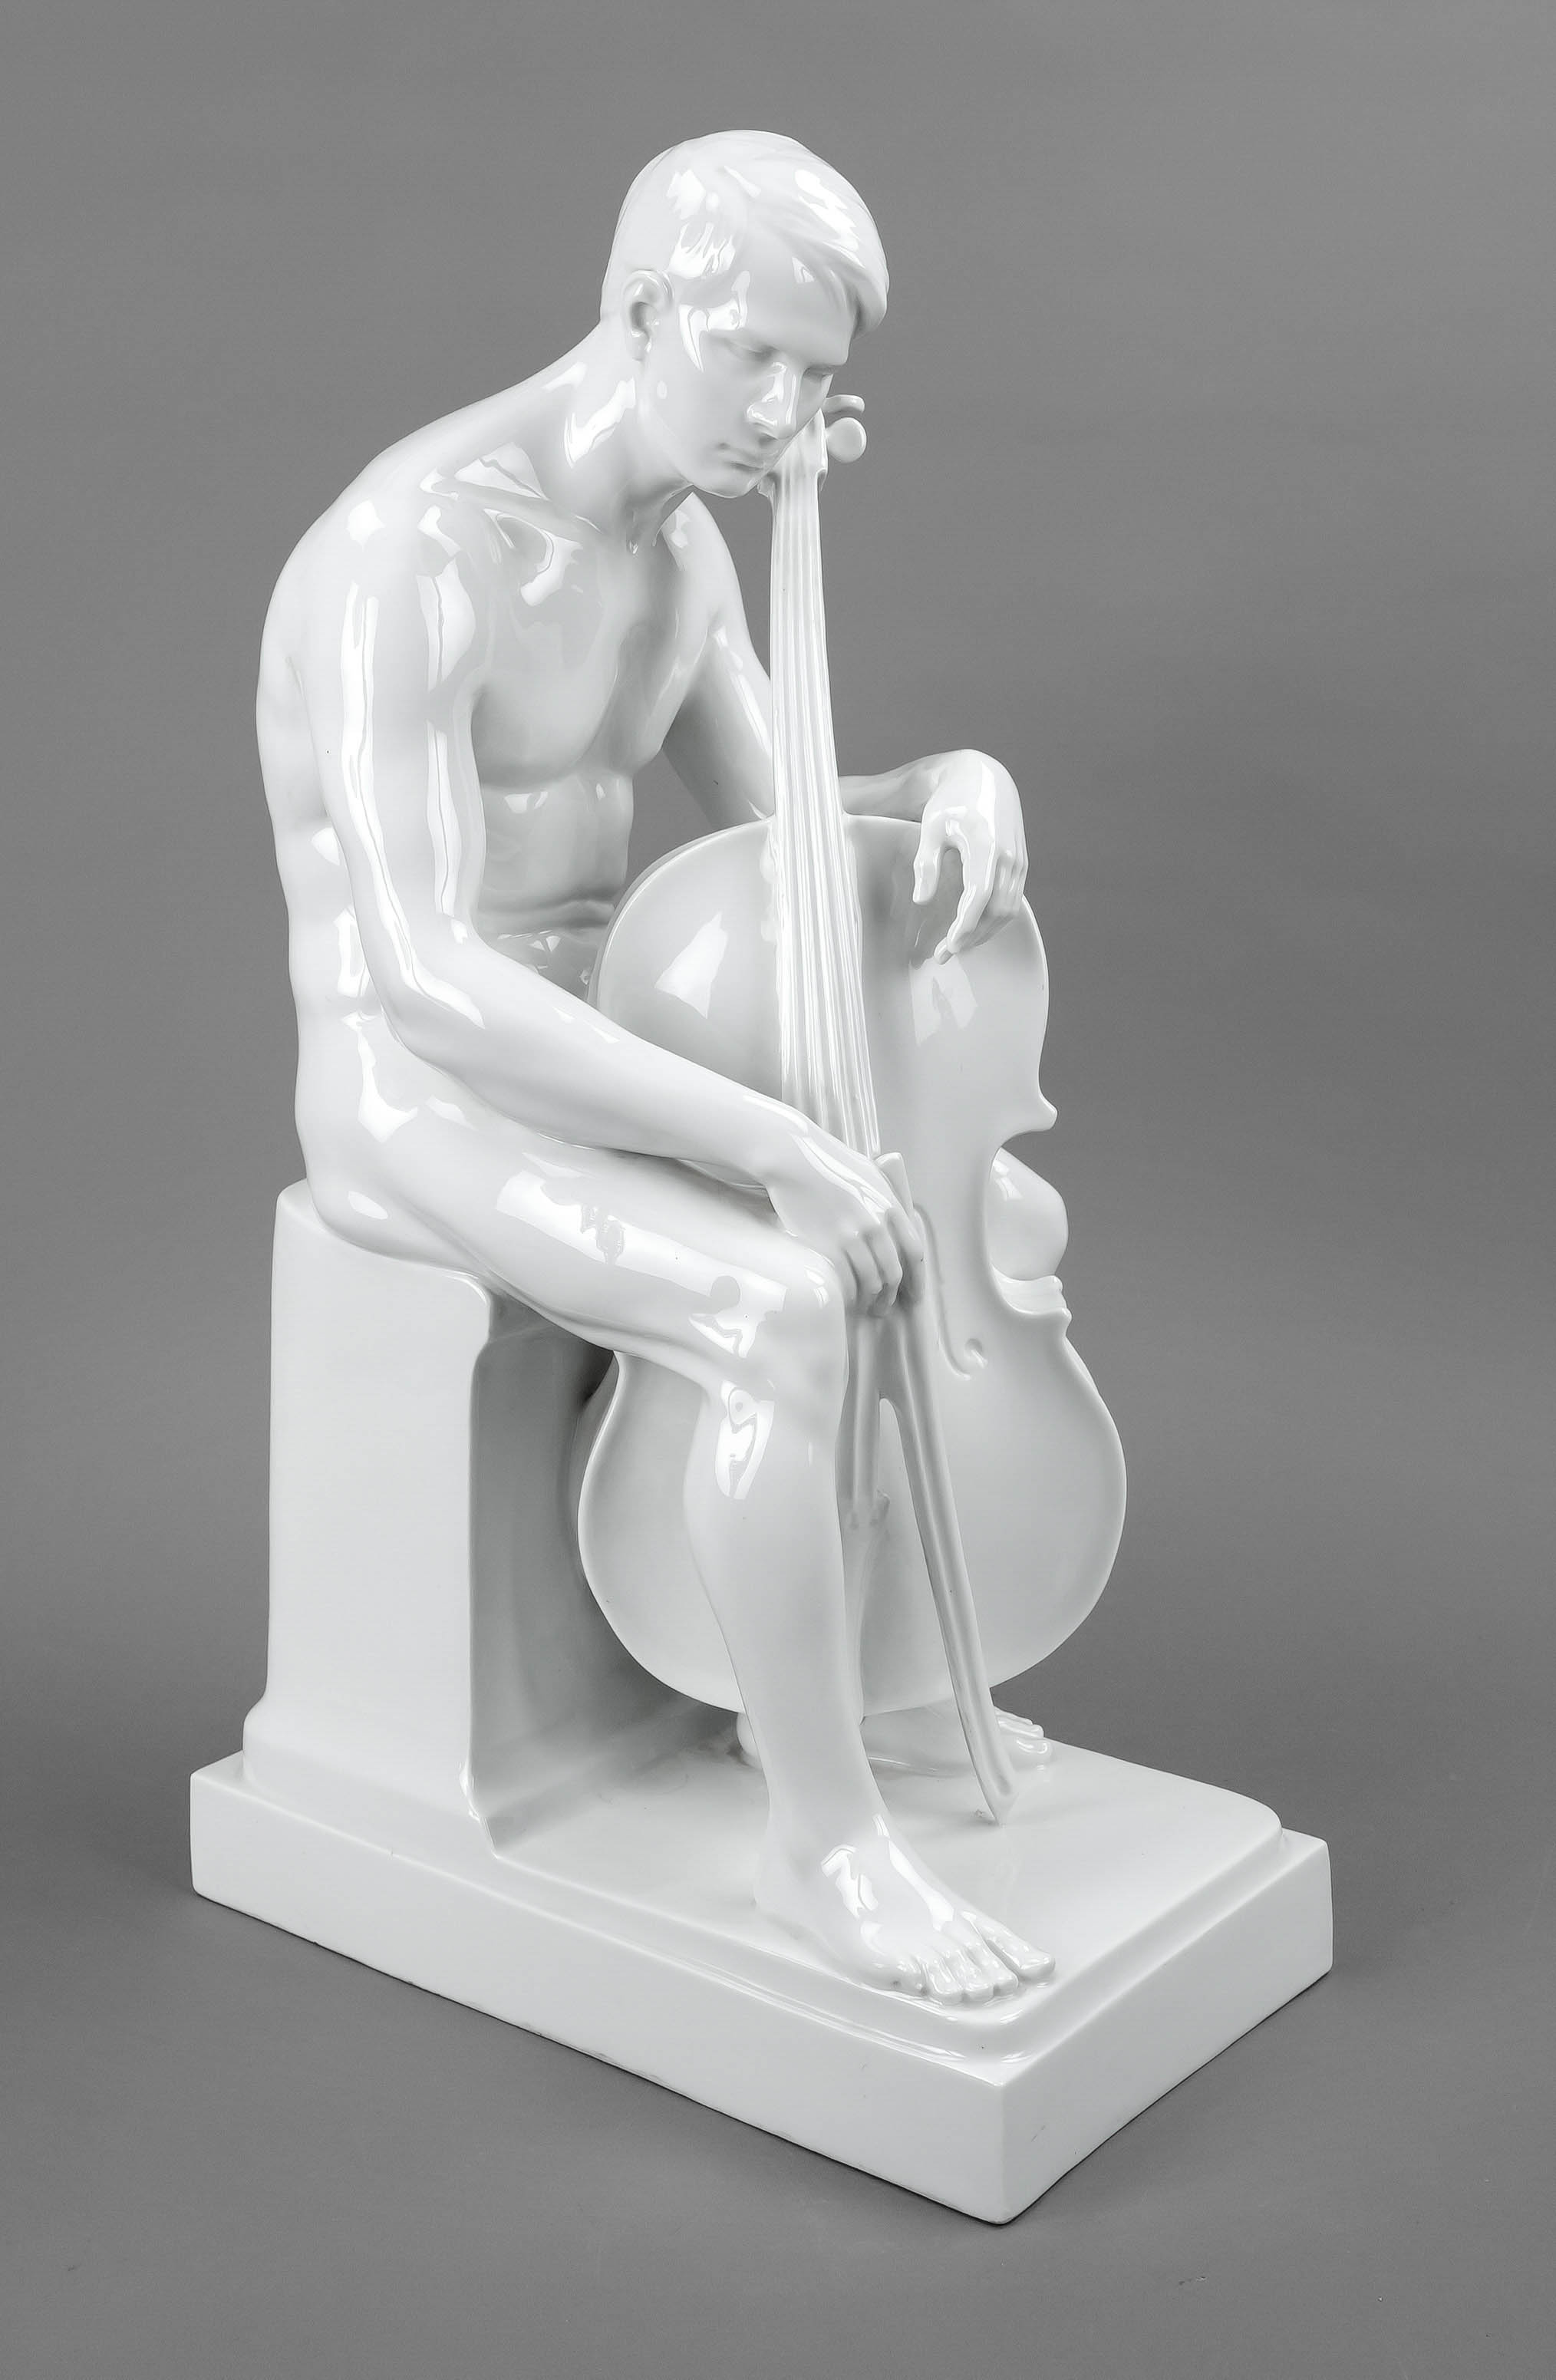 Dreamer / Cellist, Rosenthal, Selb, 1920s, designed by Karl Himmelstoss around 1917, model no. K